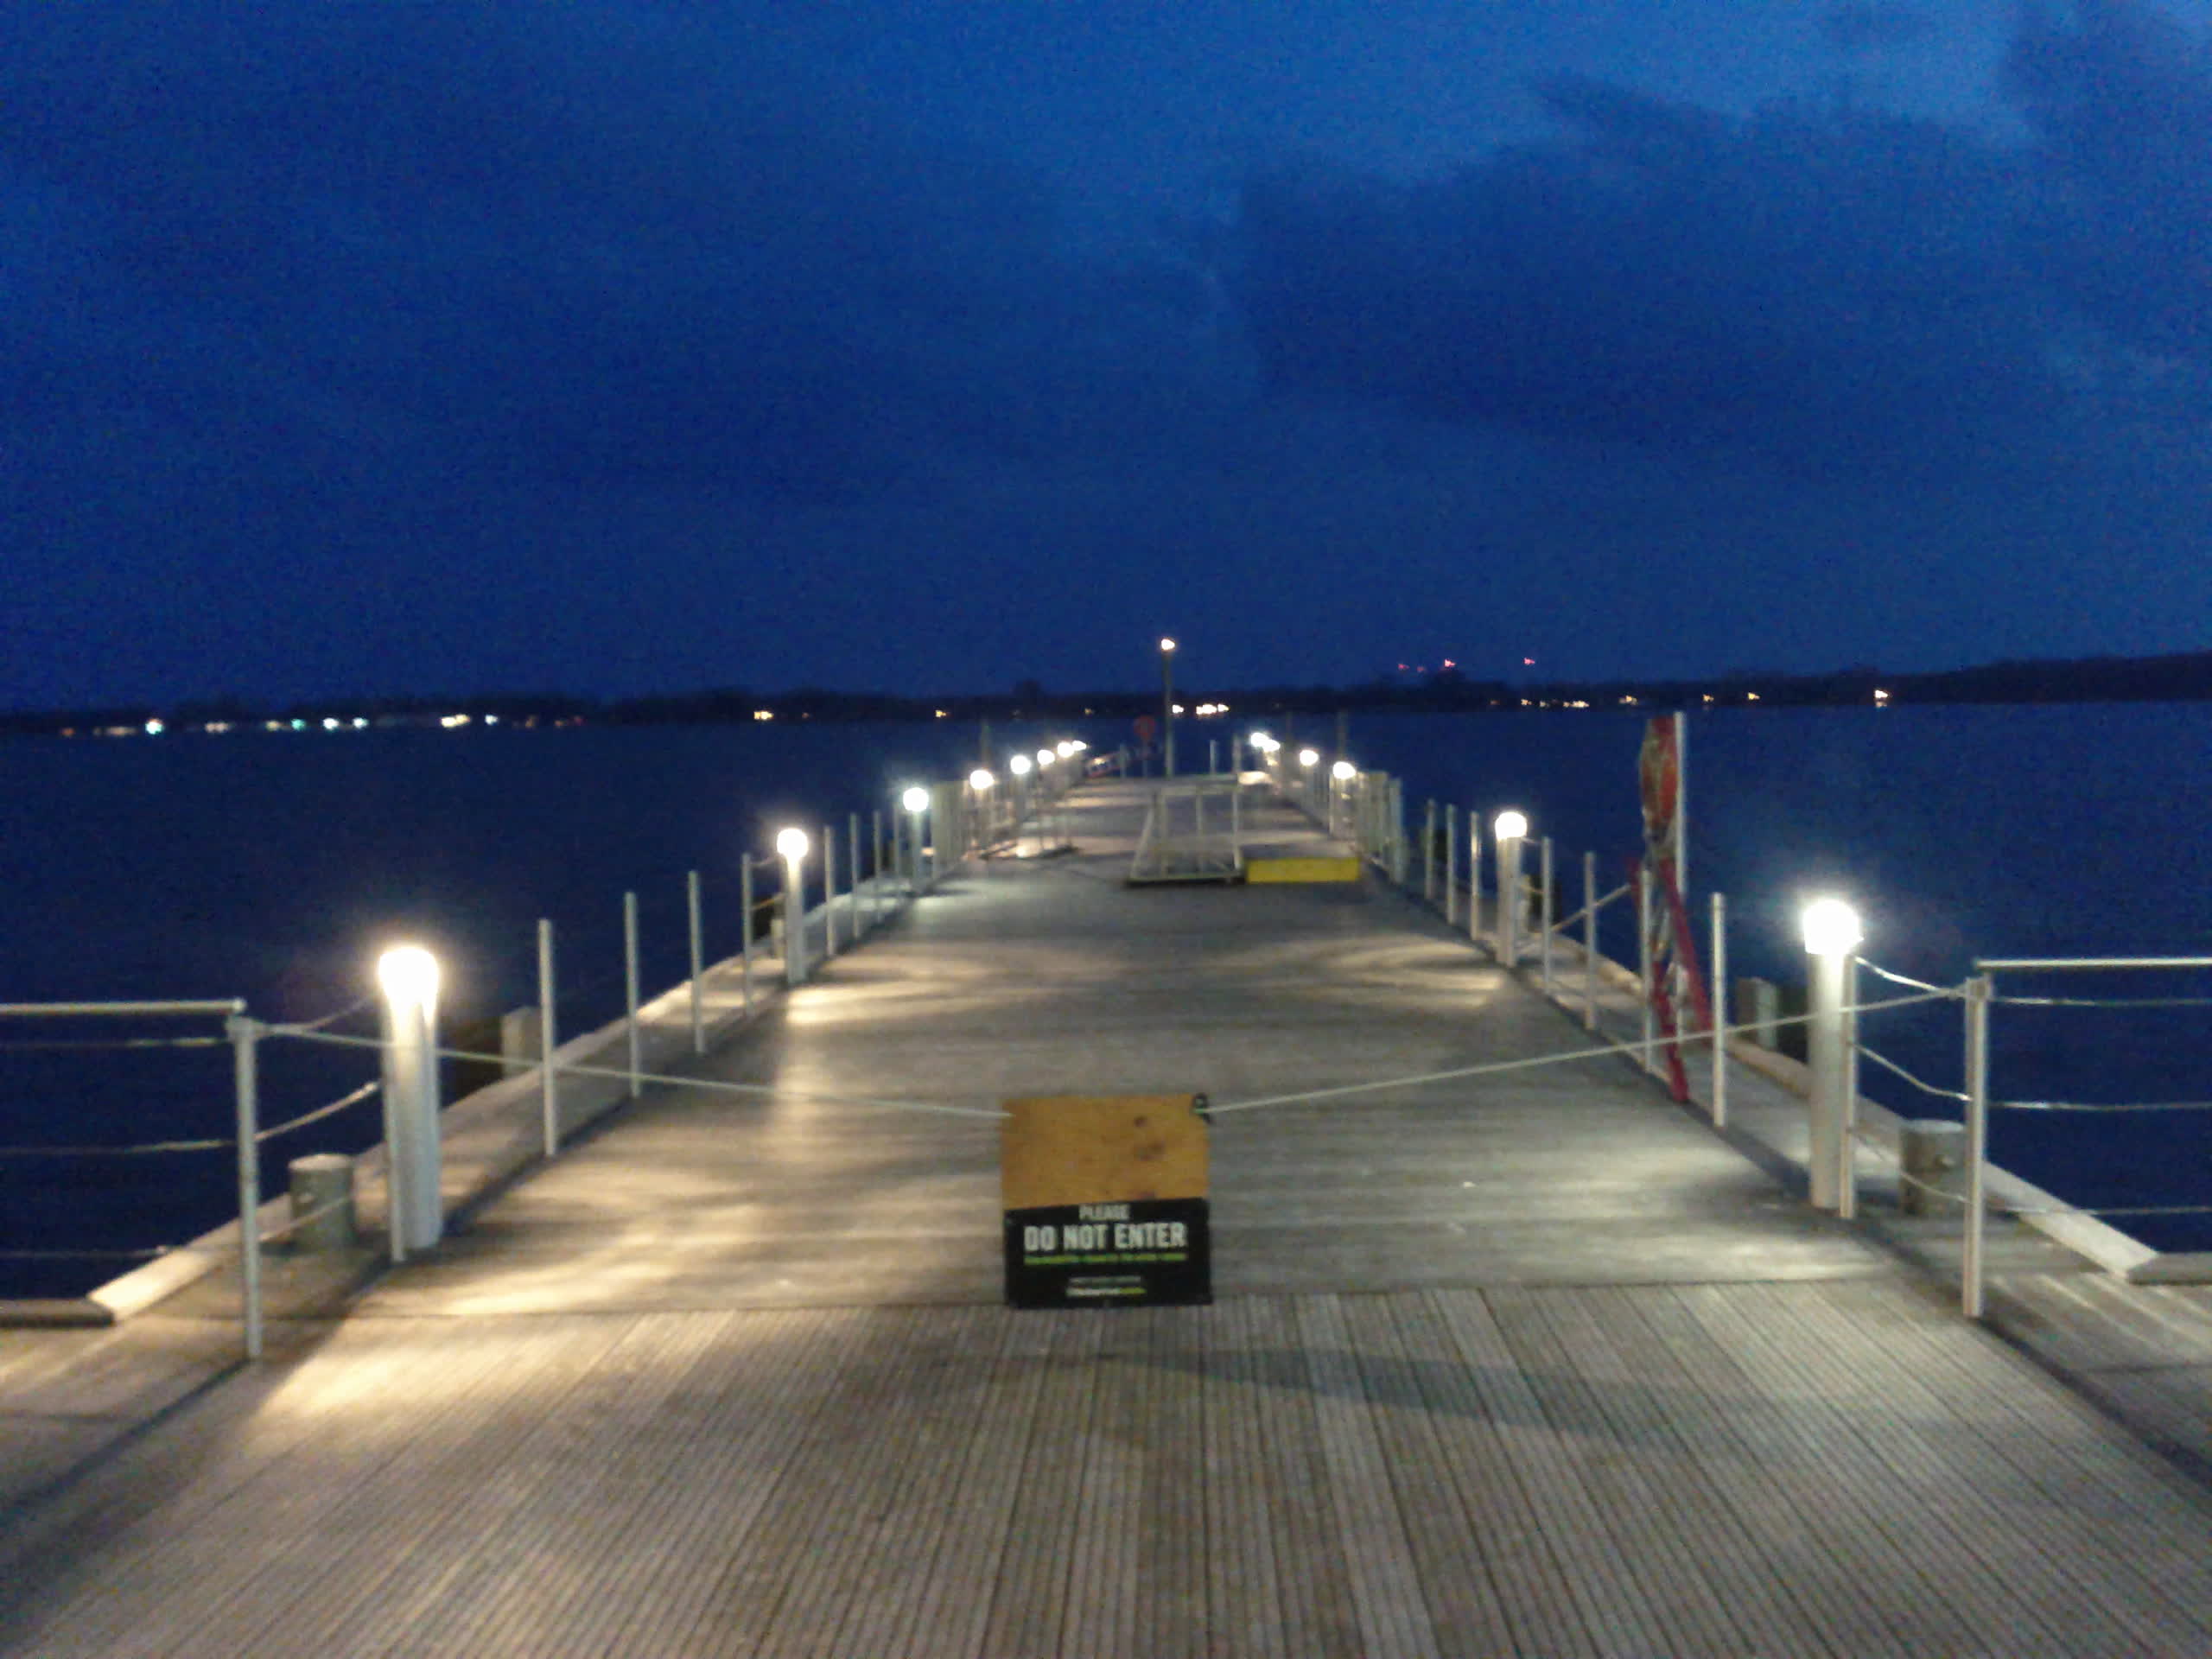 Lake Ontario. It was getting dark, but my phone camera has a reasonable night mode.